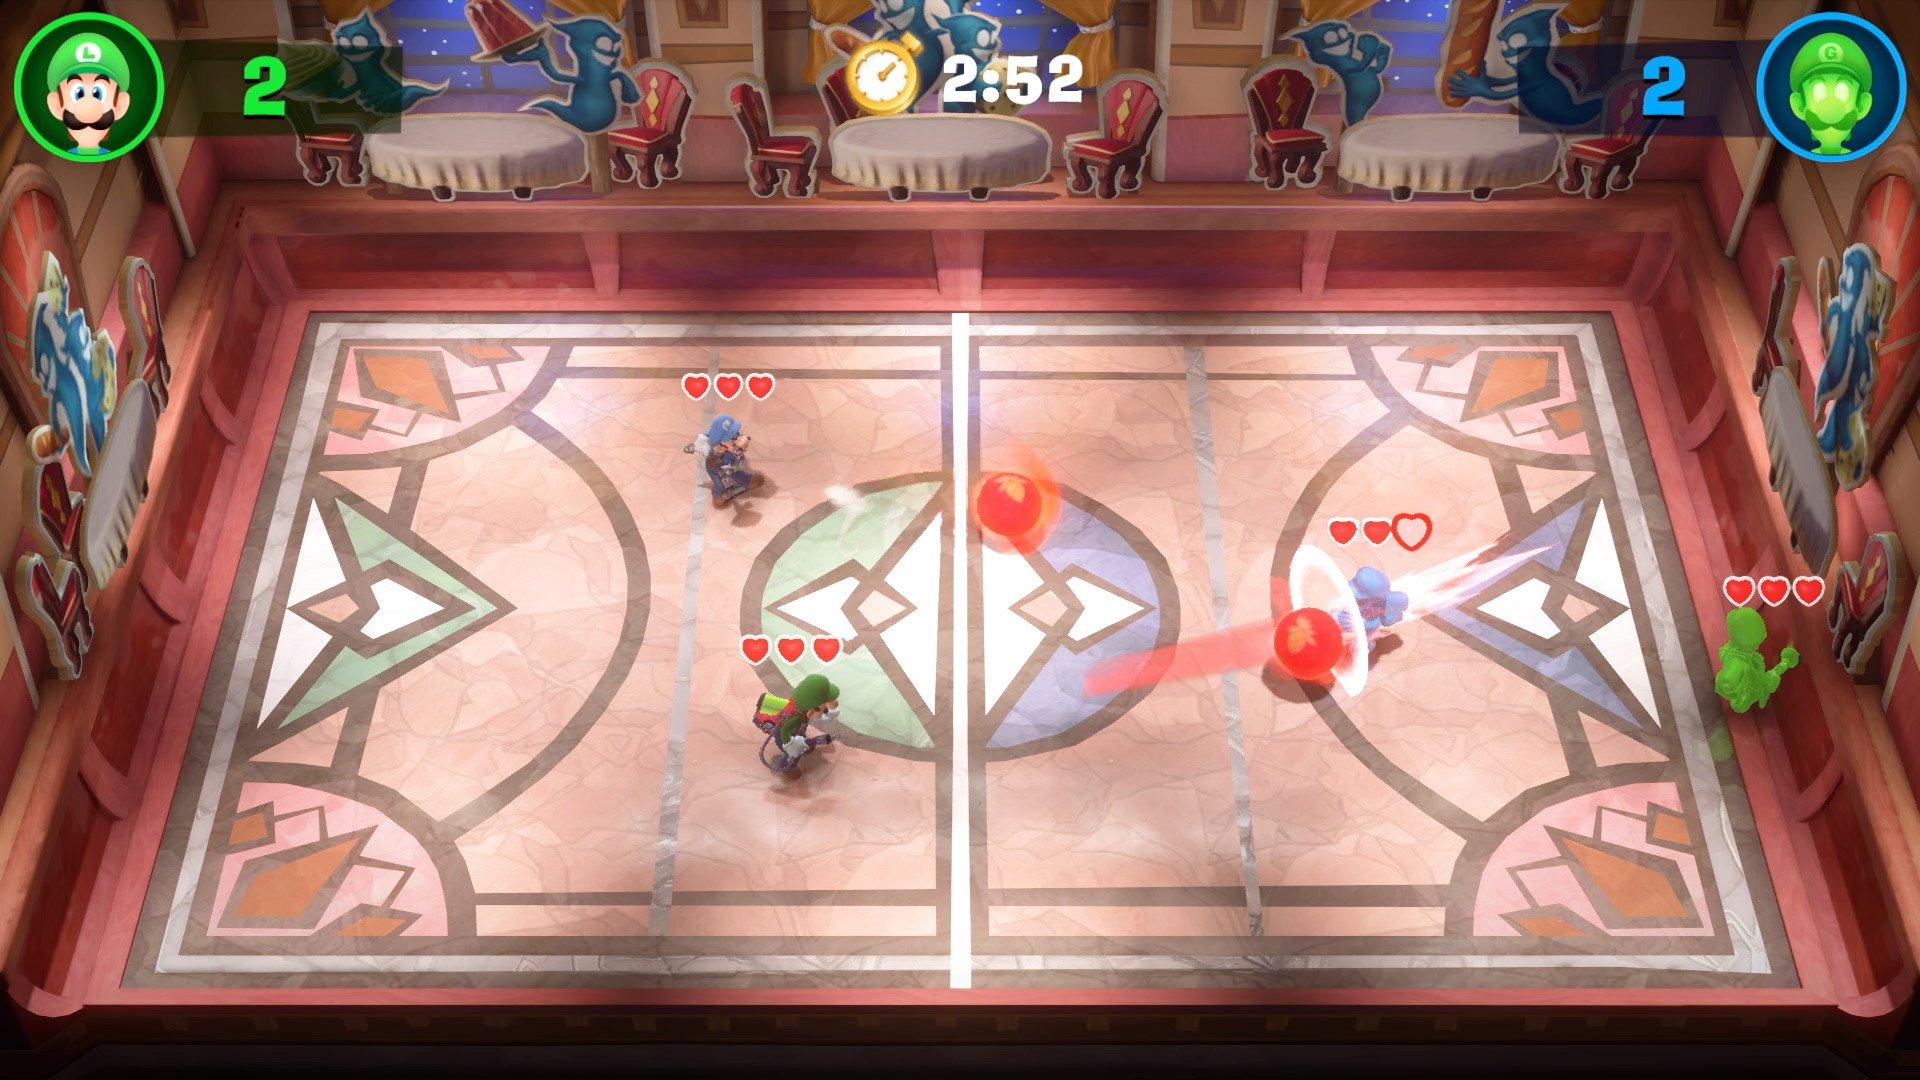 Luigi's Mansion 3 Multiplayer Pack DLC